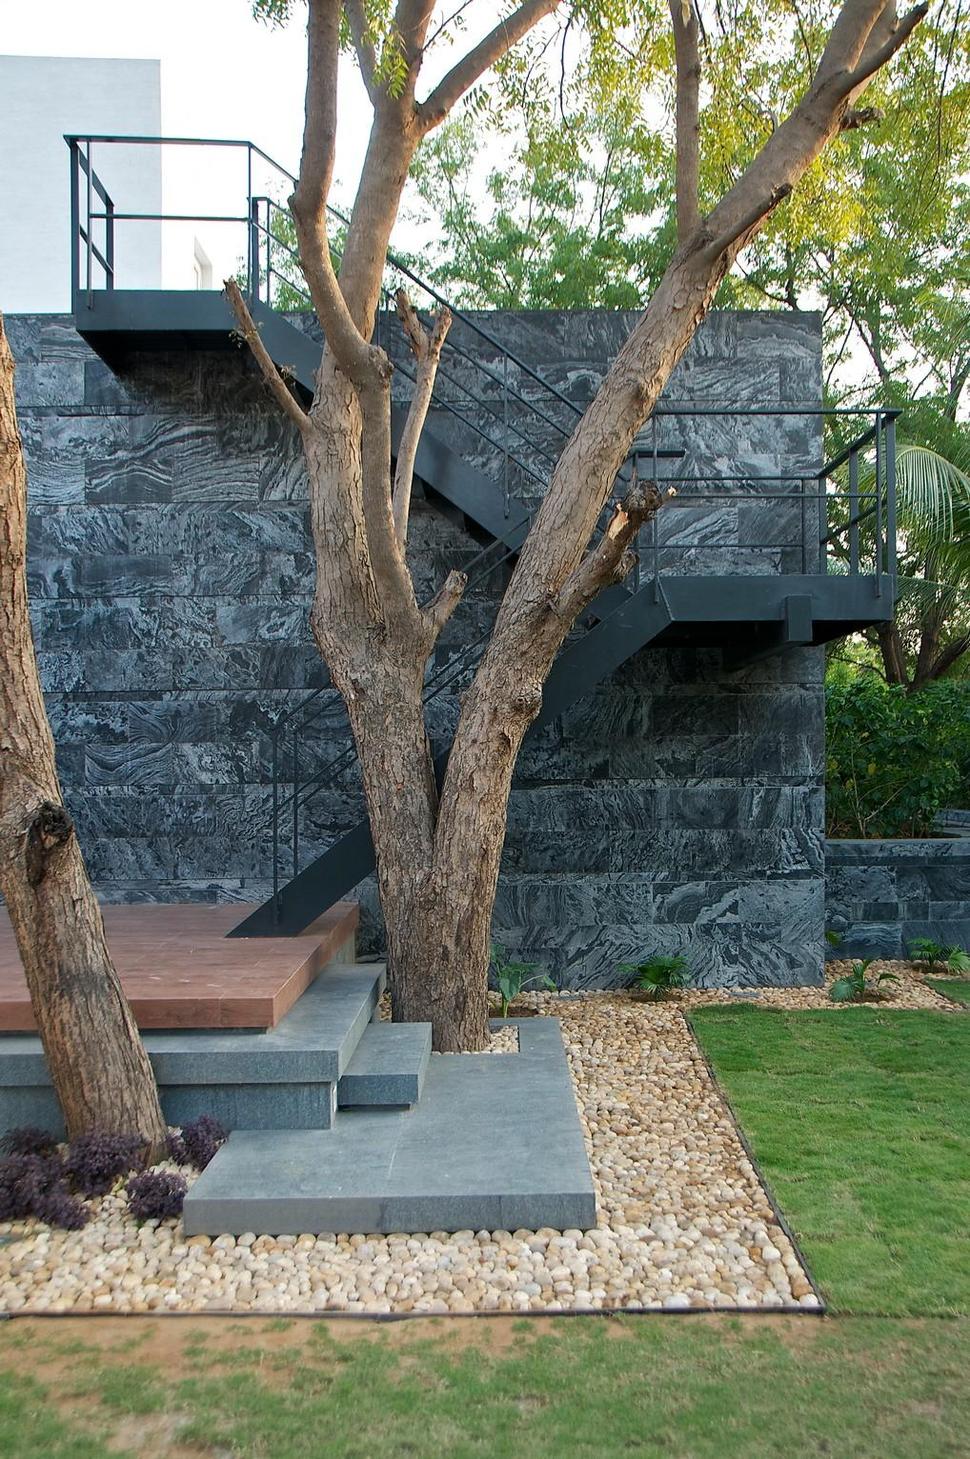 geometri-architecture-creates-artistic-minimalist-statement-11-outdoor-stairs.jpg